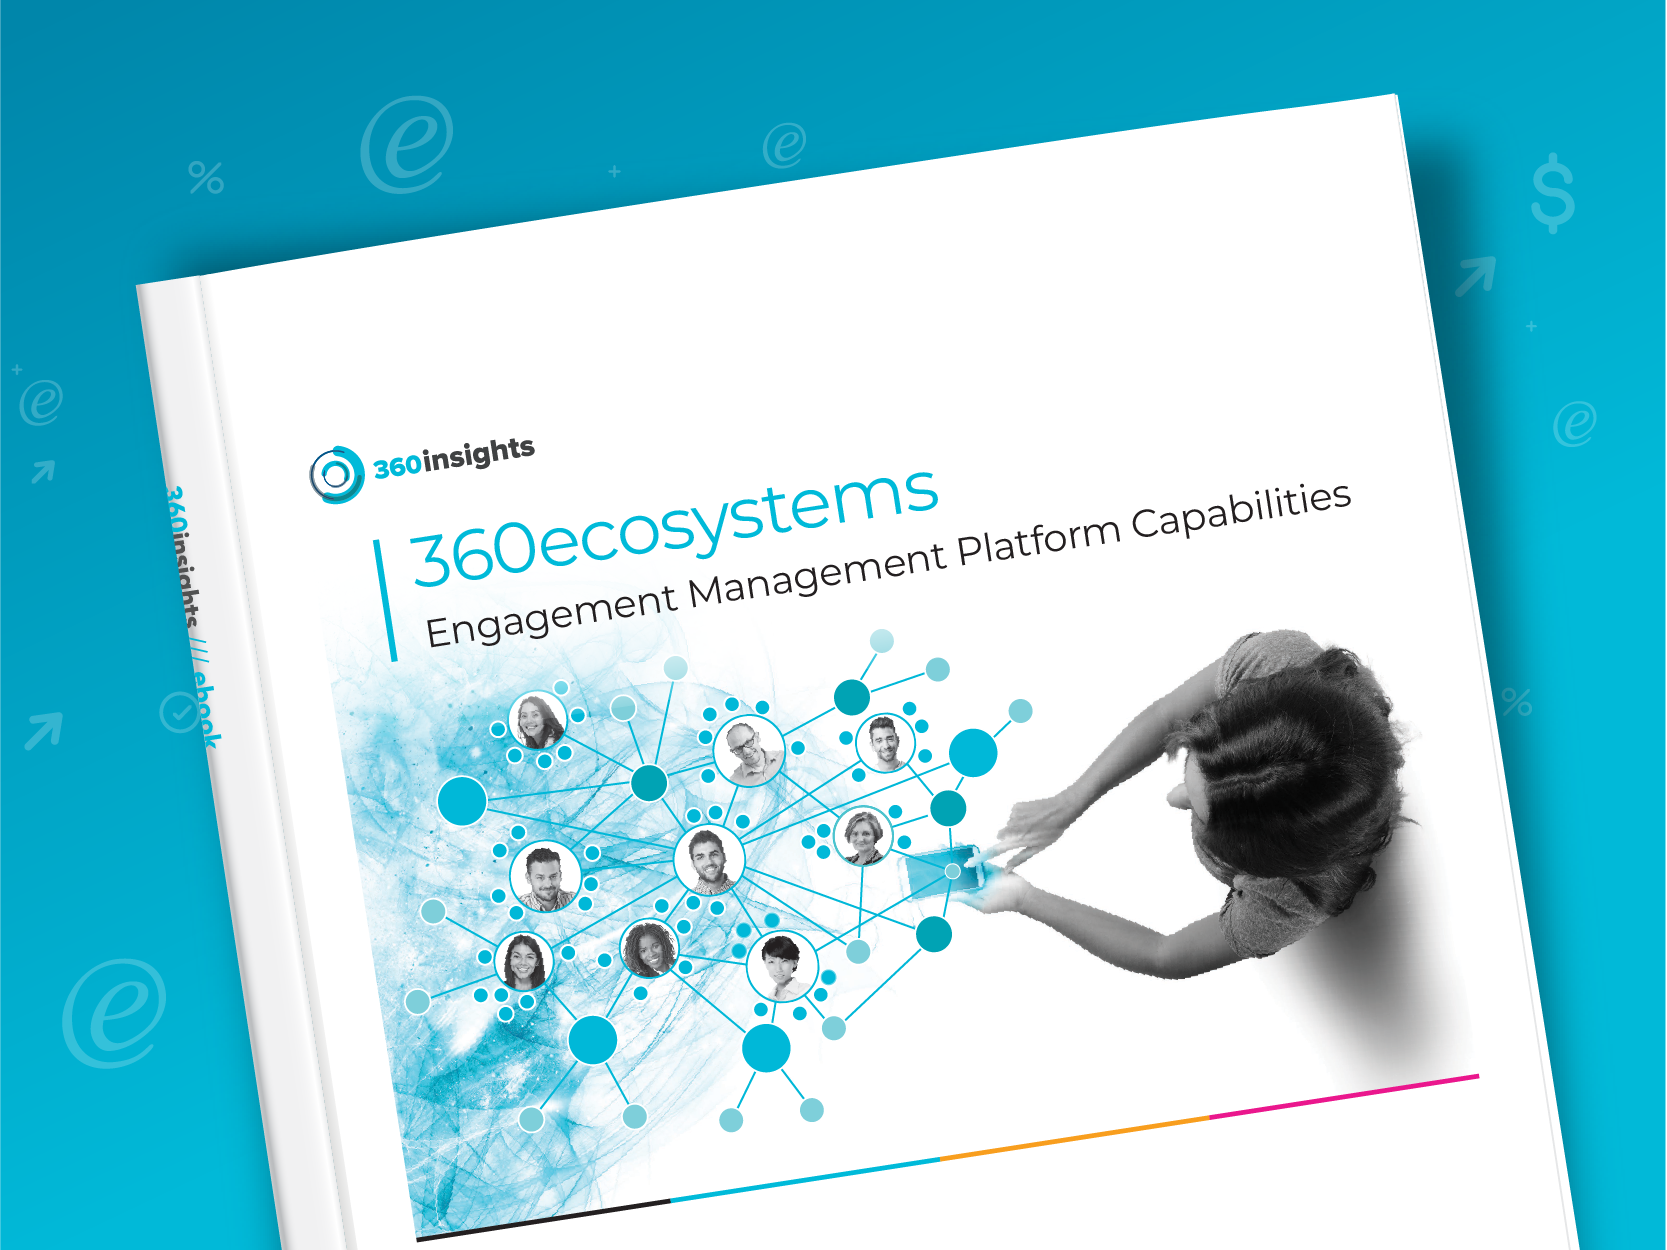 e-book about 360ecosystems engagement management platform capabilities